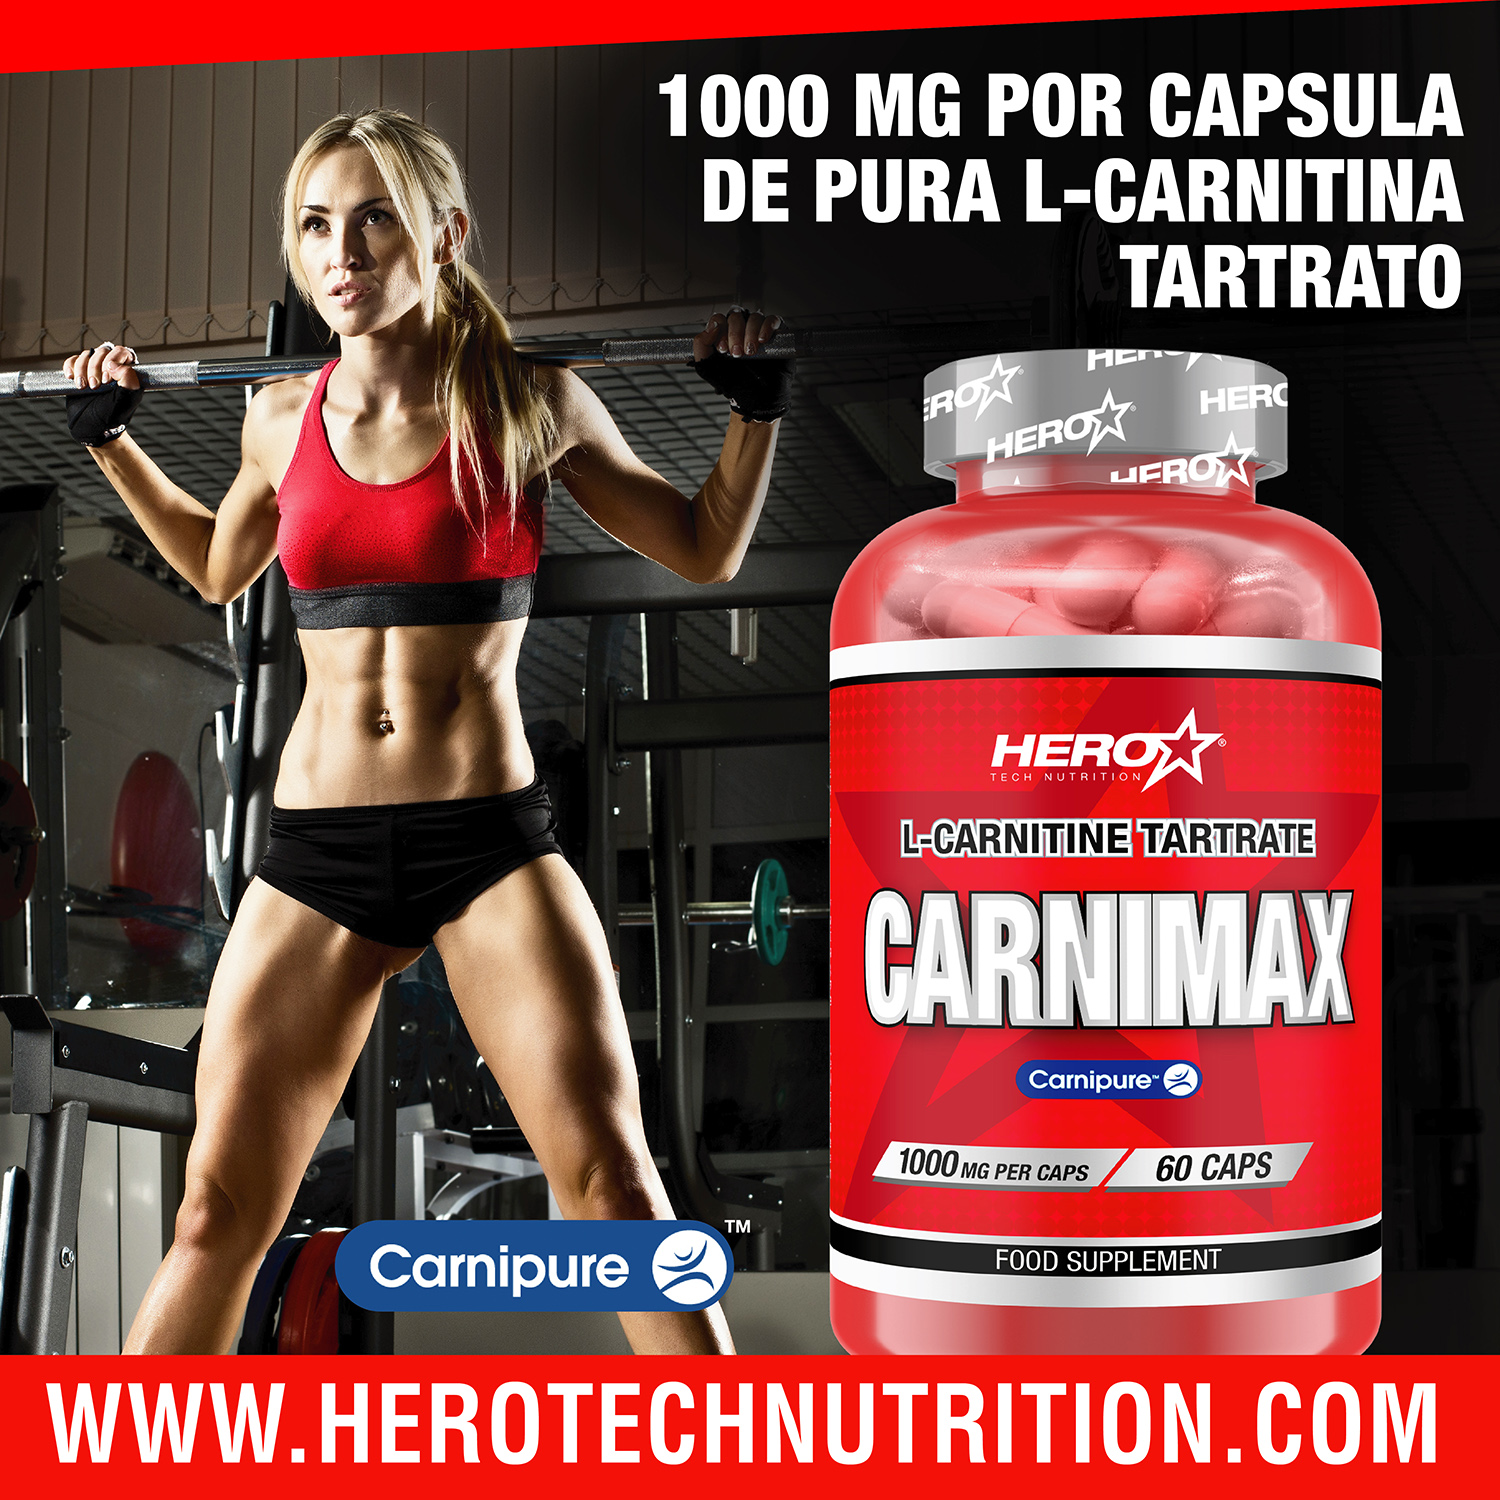 CARNIMAX CARNITINA HERO TECH NUTRITION herotechnutrition